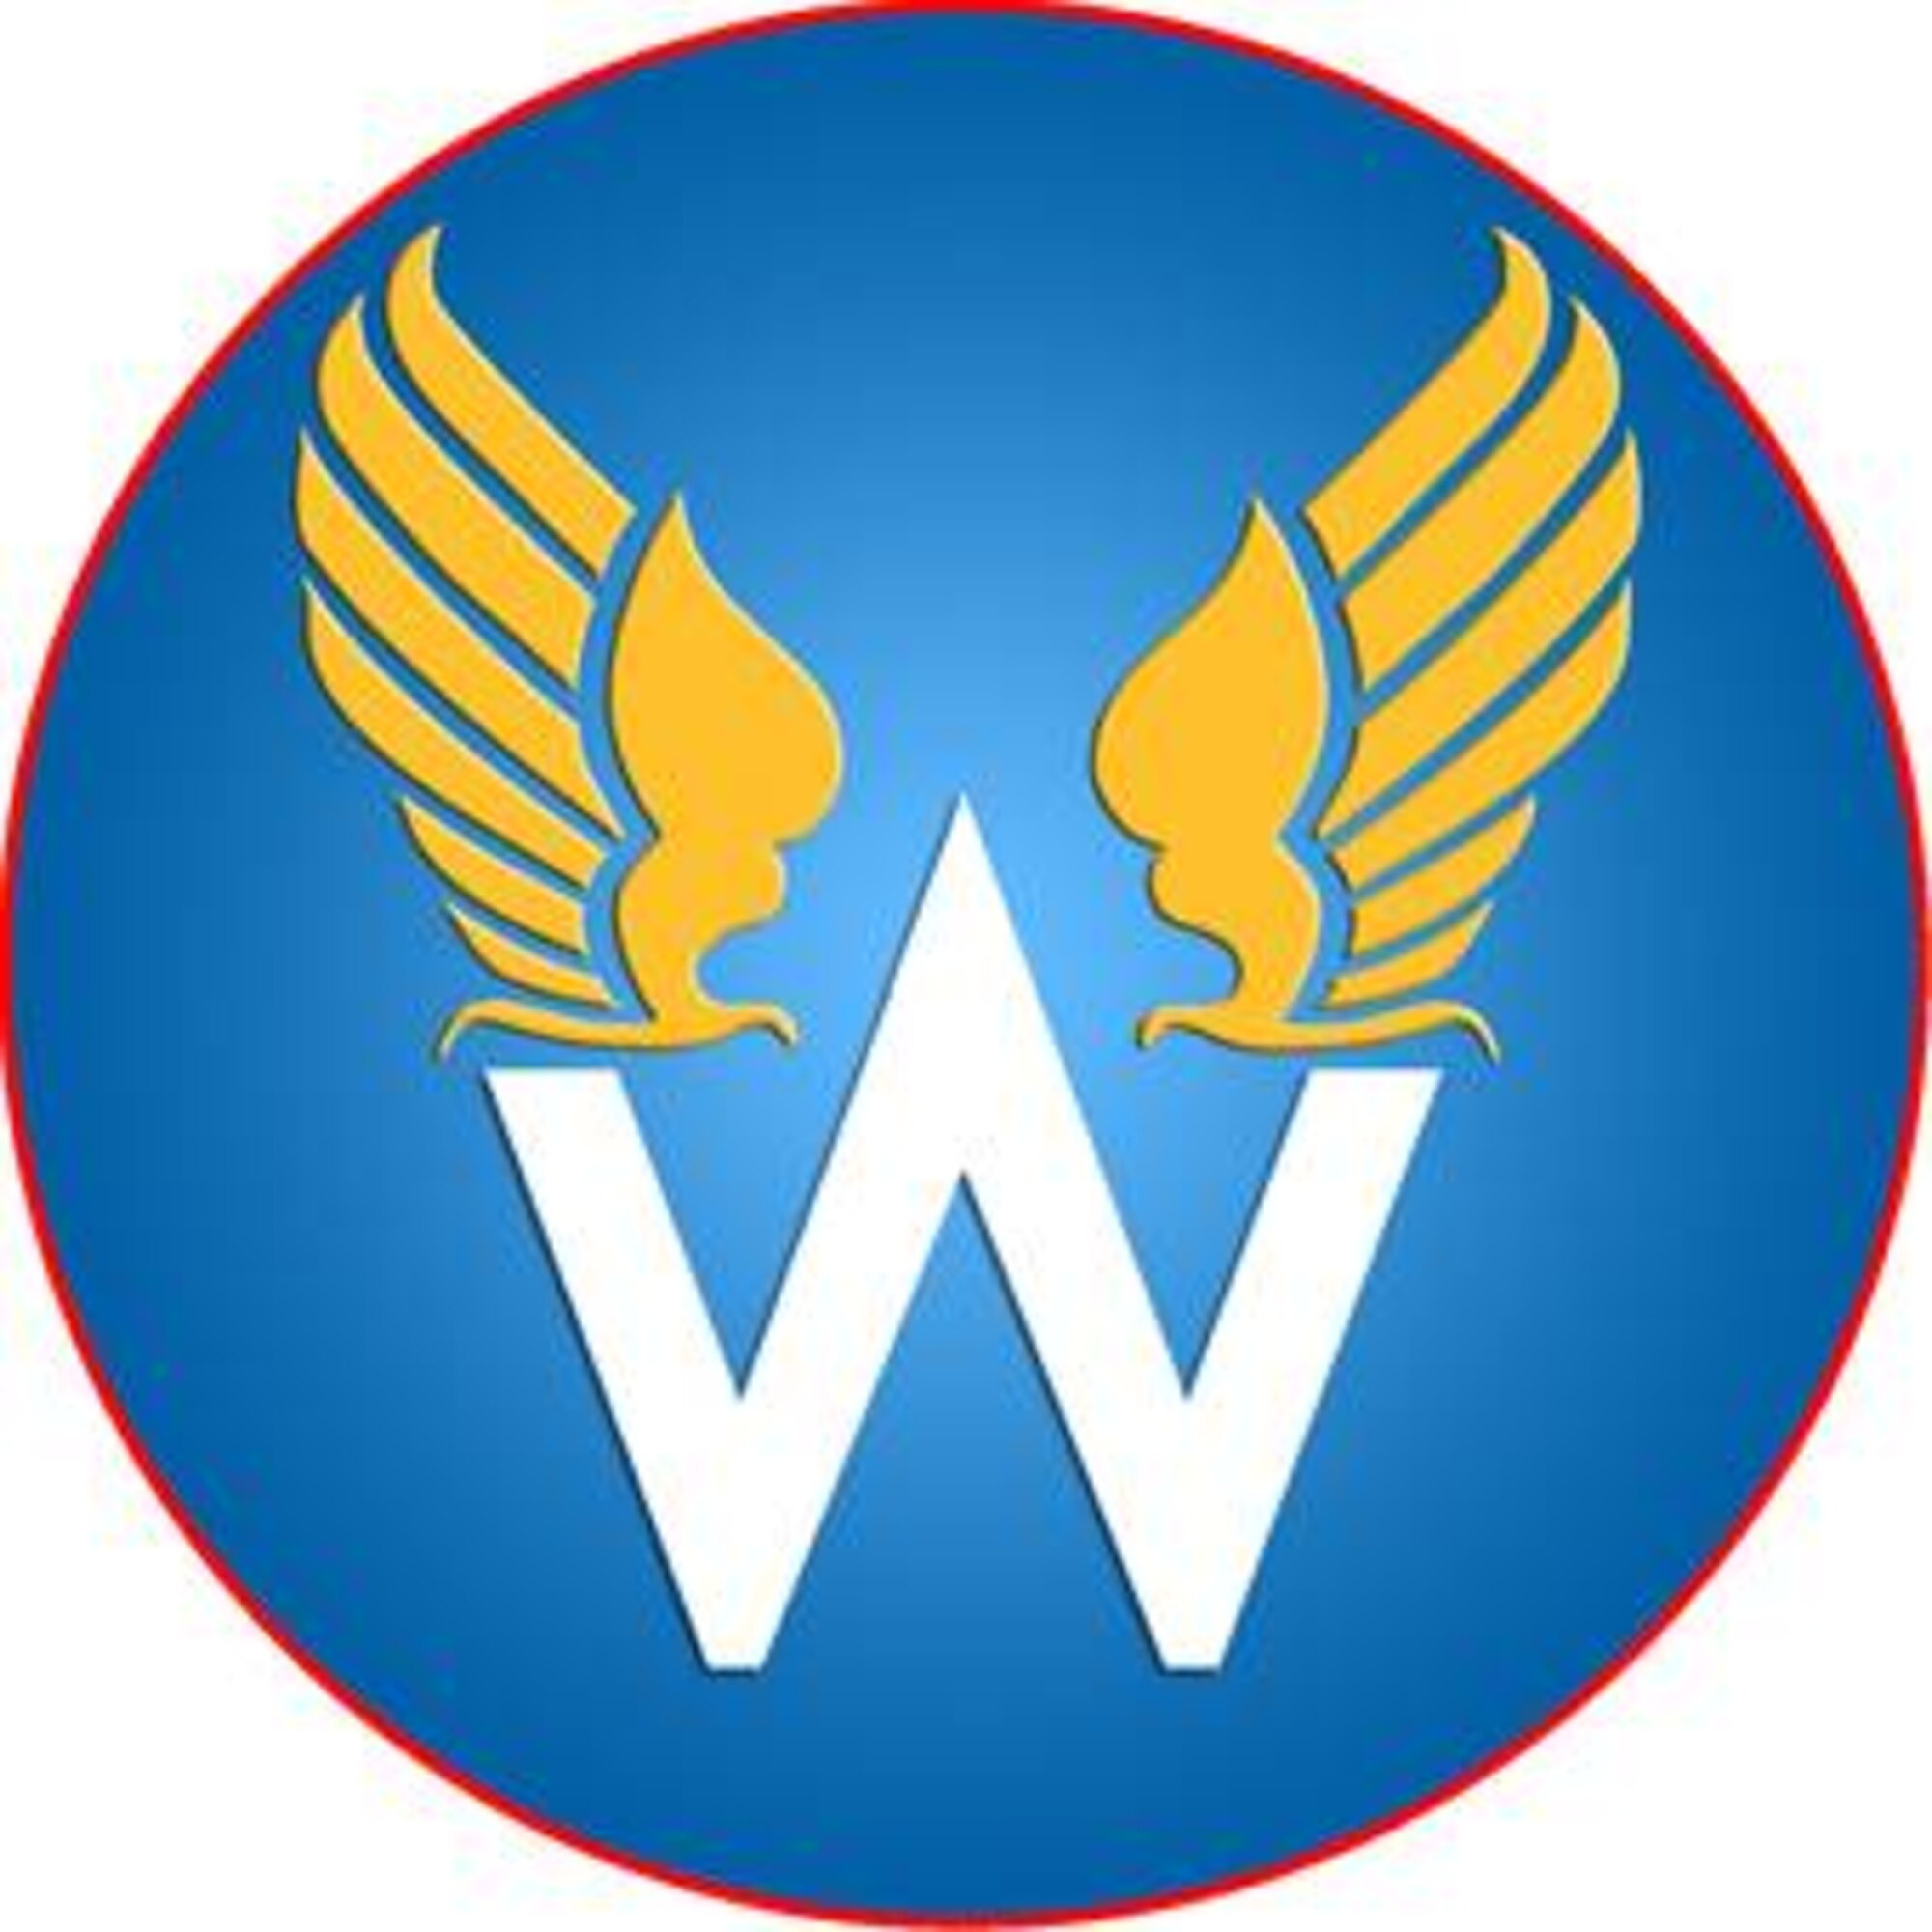 Wingman (U.S. Air Force graphic/Senior Airman Stephen Cadette)